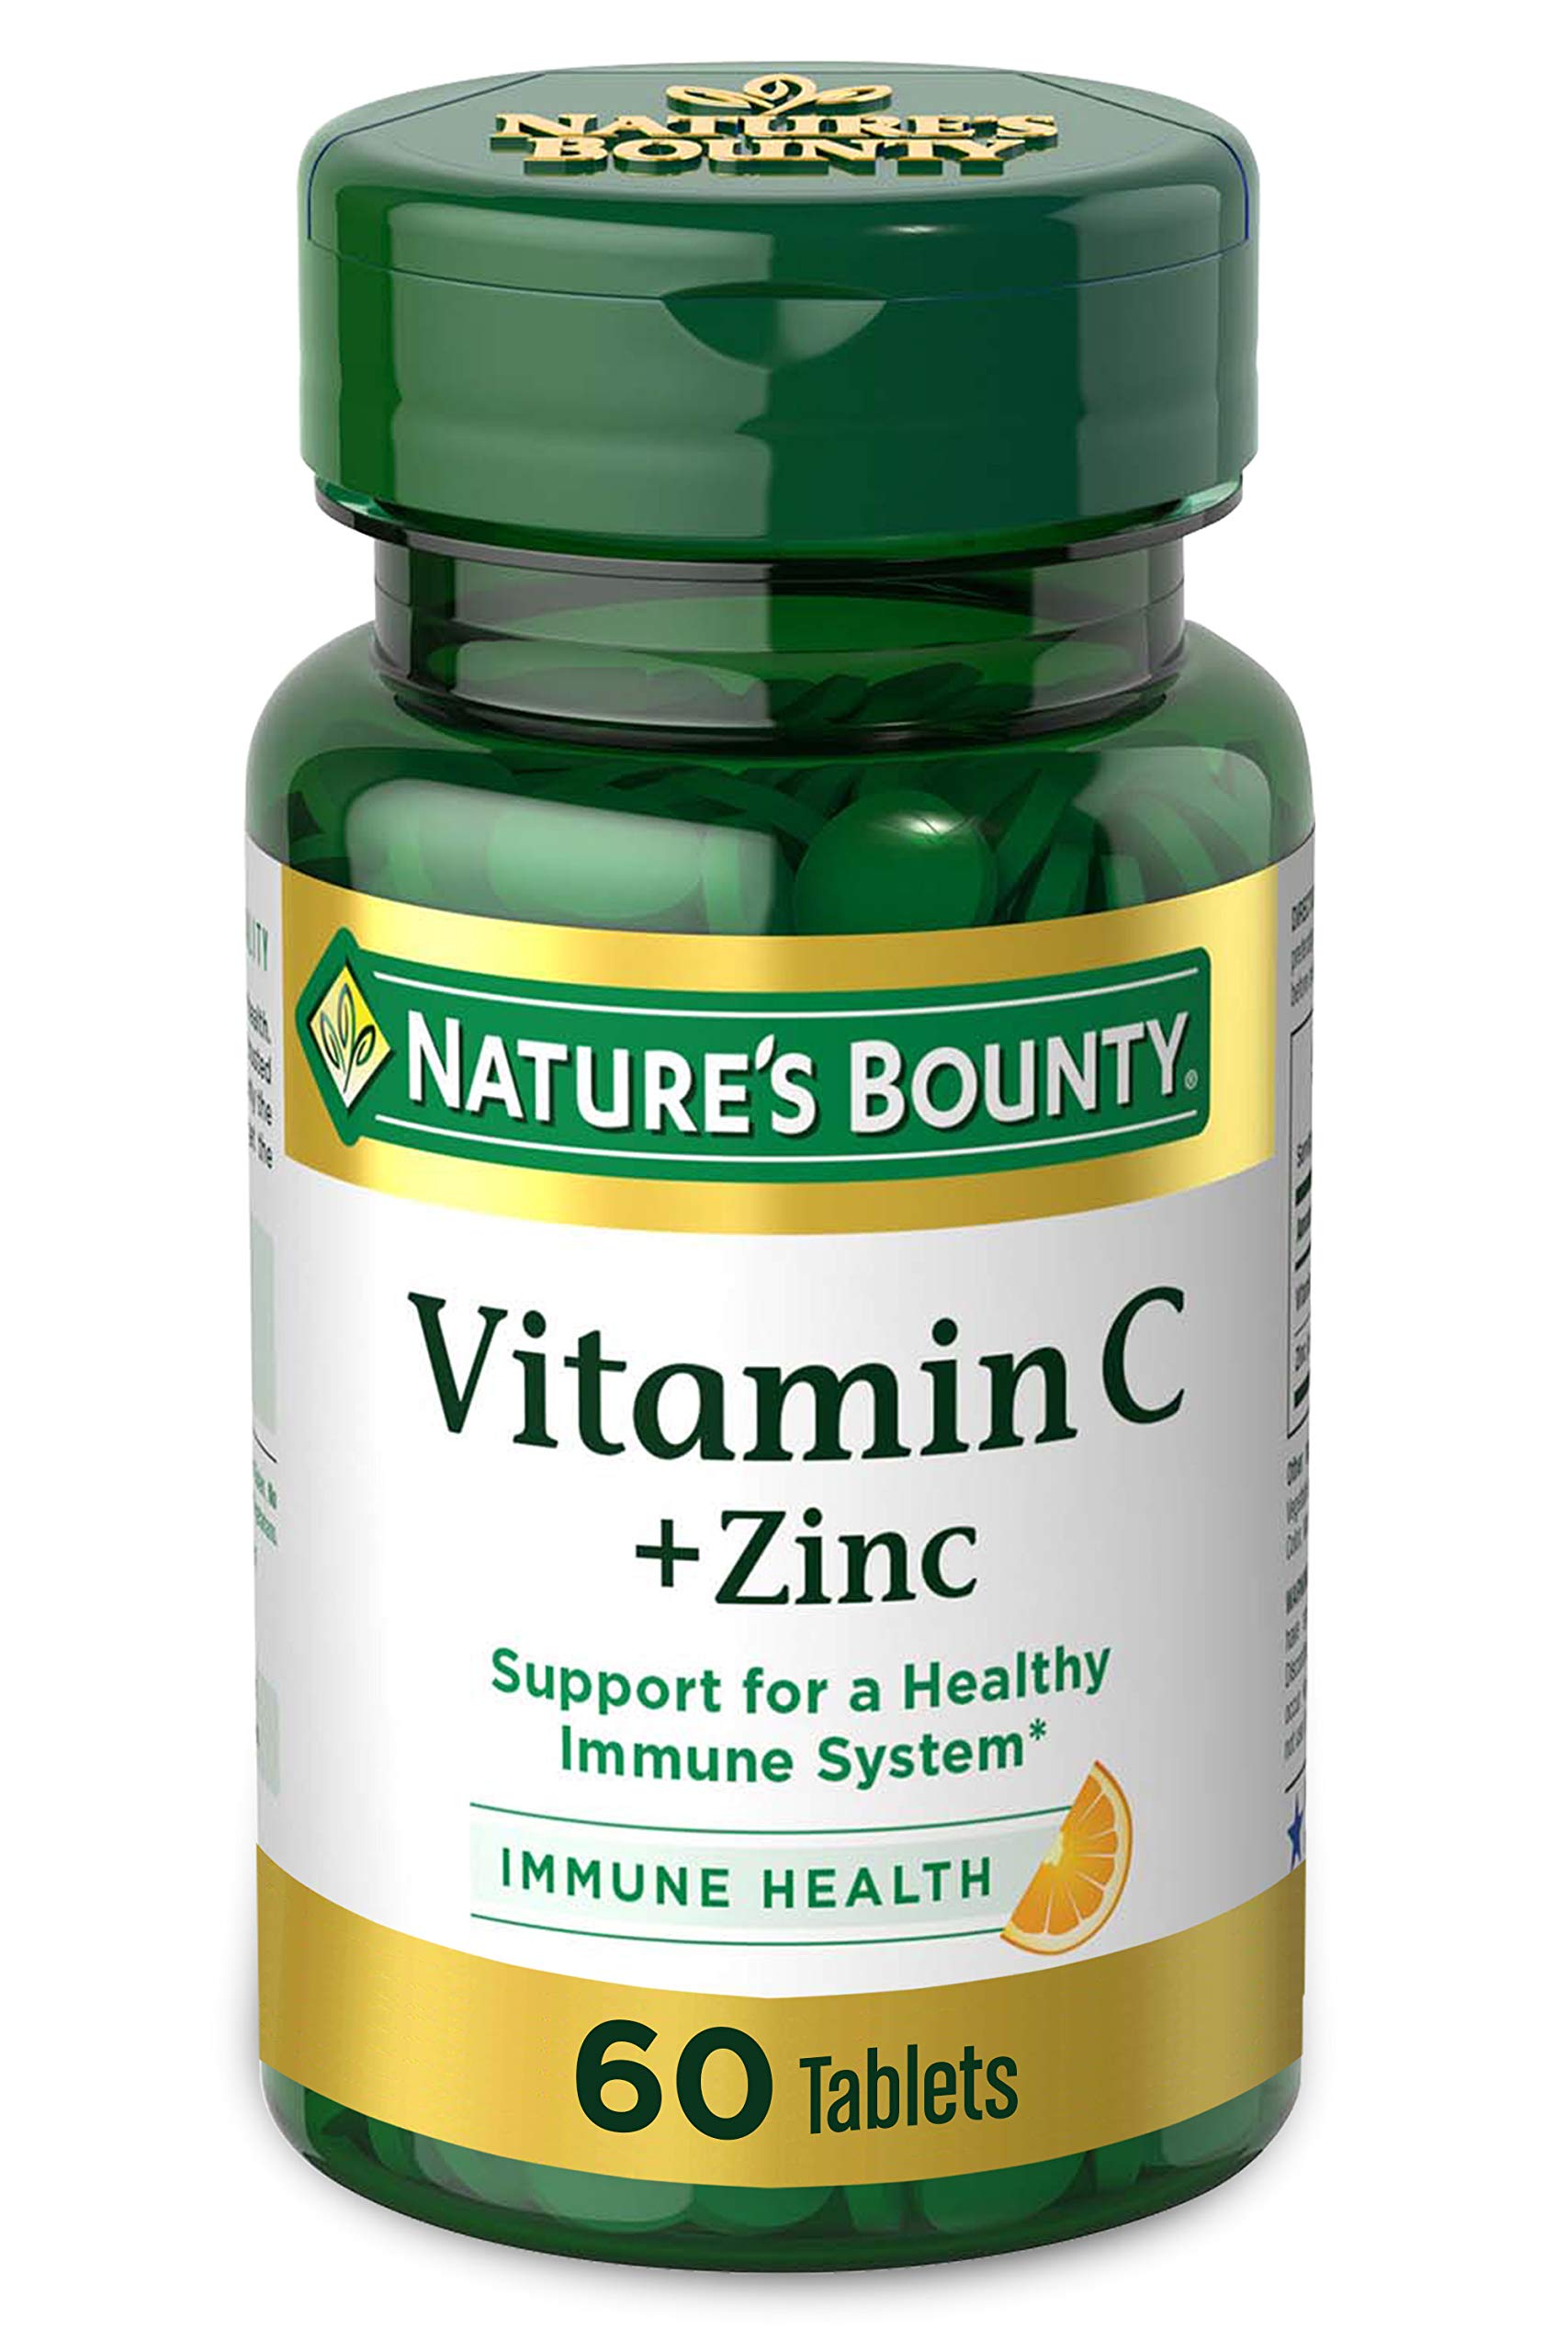 Vitamin C + Zinc by Nature